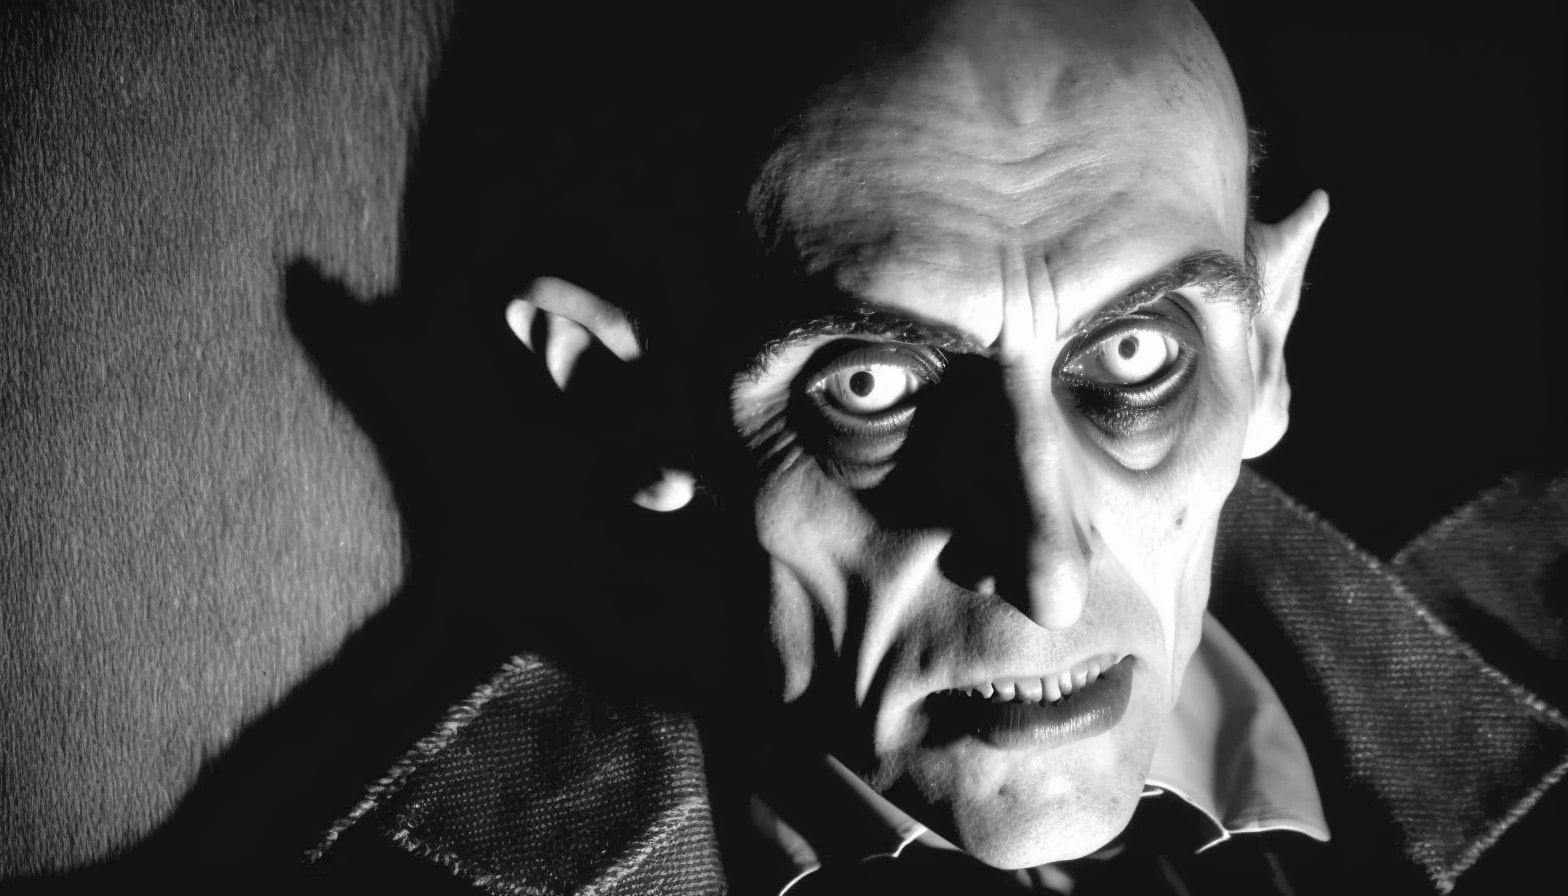 Nosferatu-1922-The-First-Vampire-Movie-Still-Scares-100-Years-Later.jpg